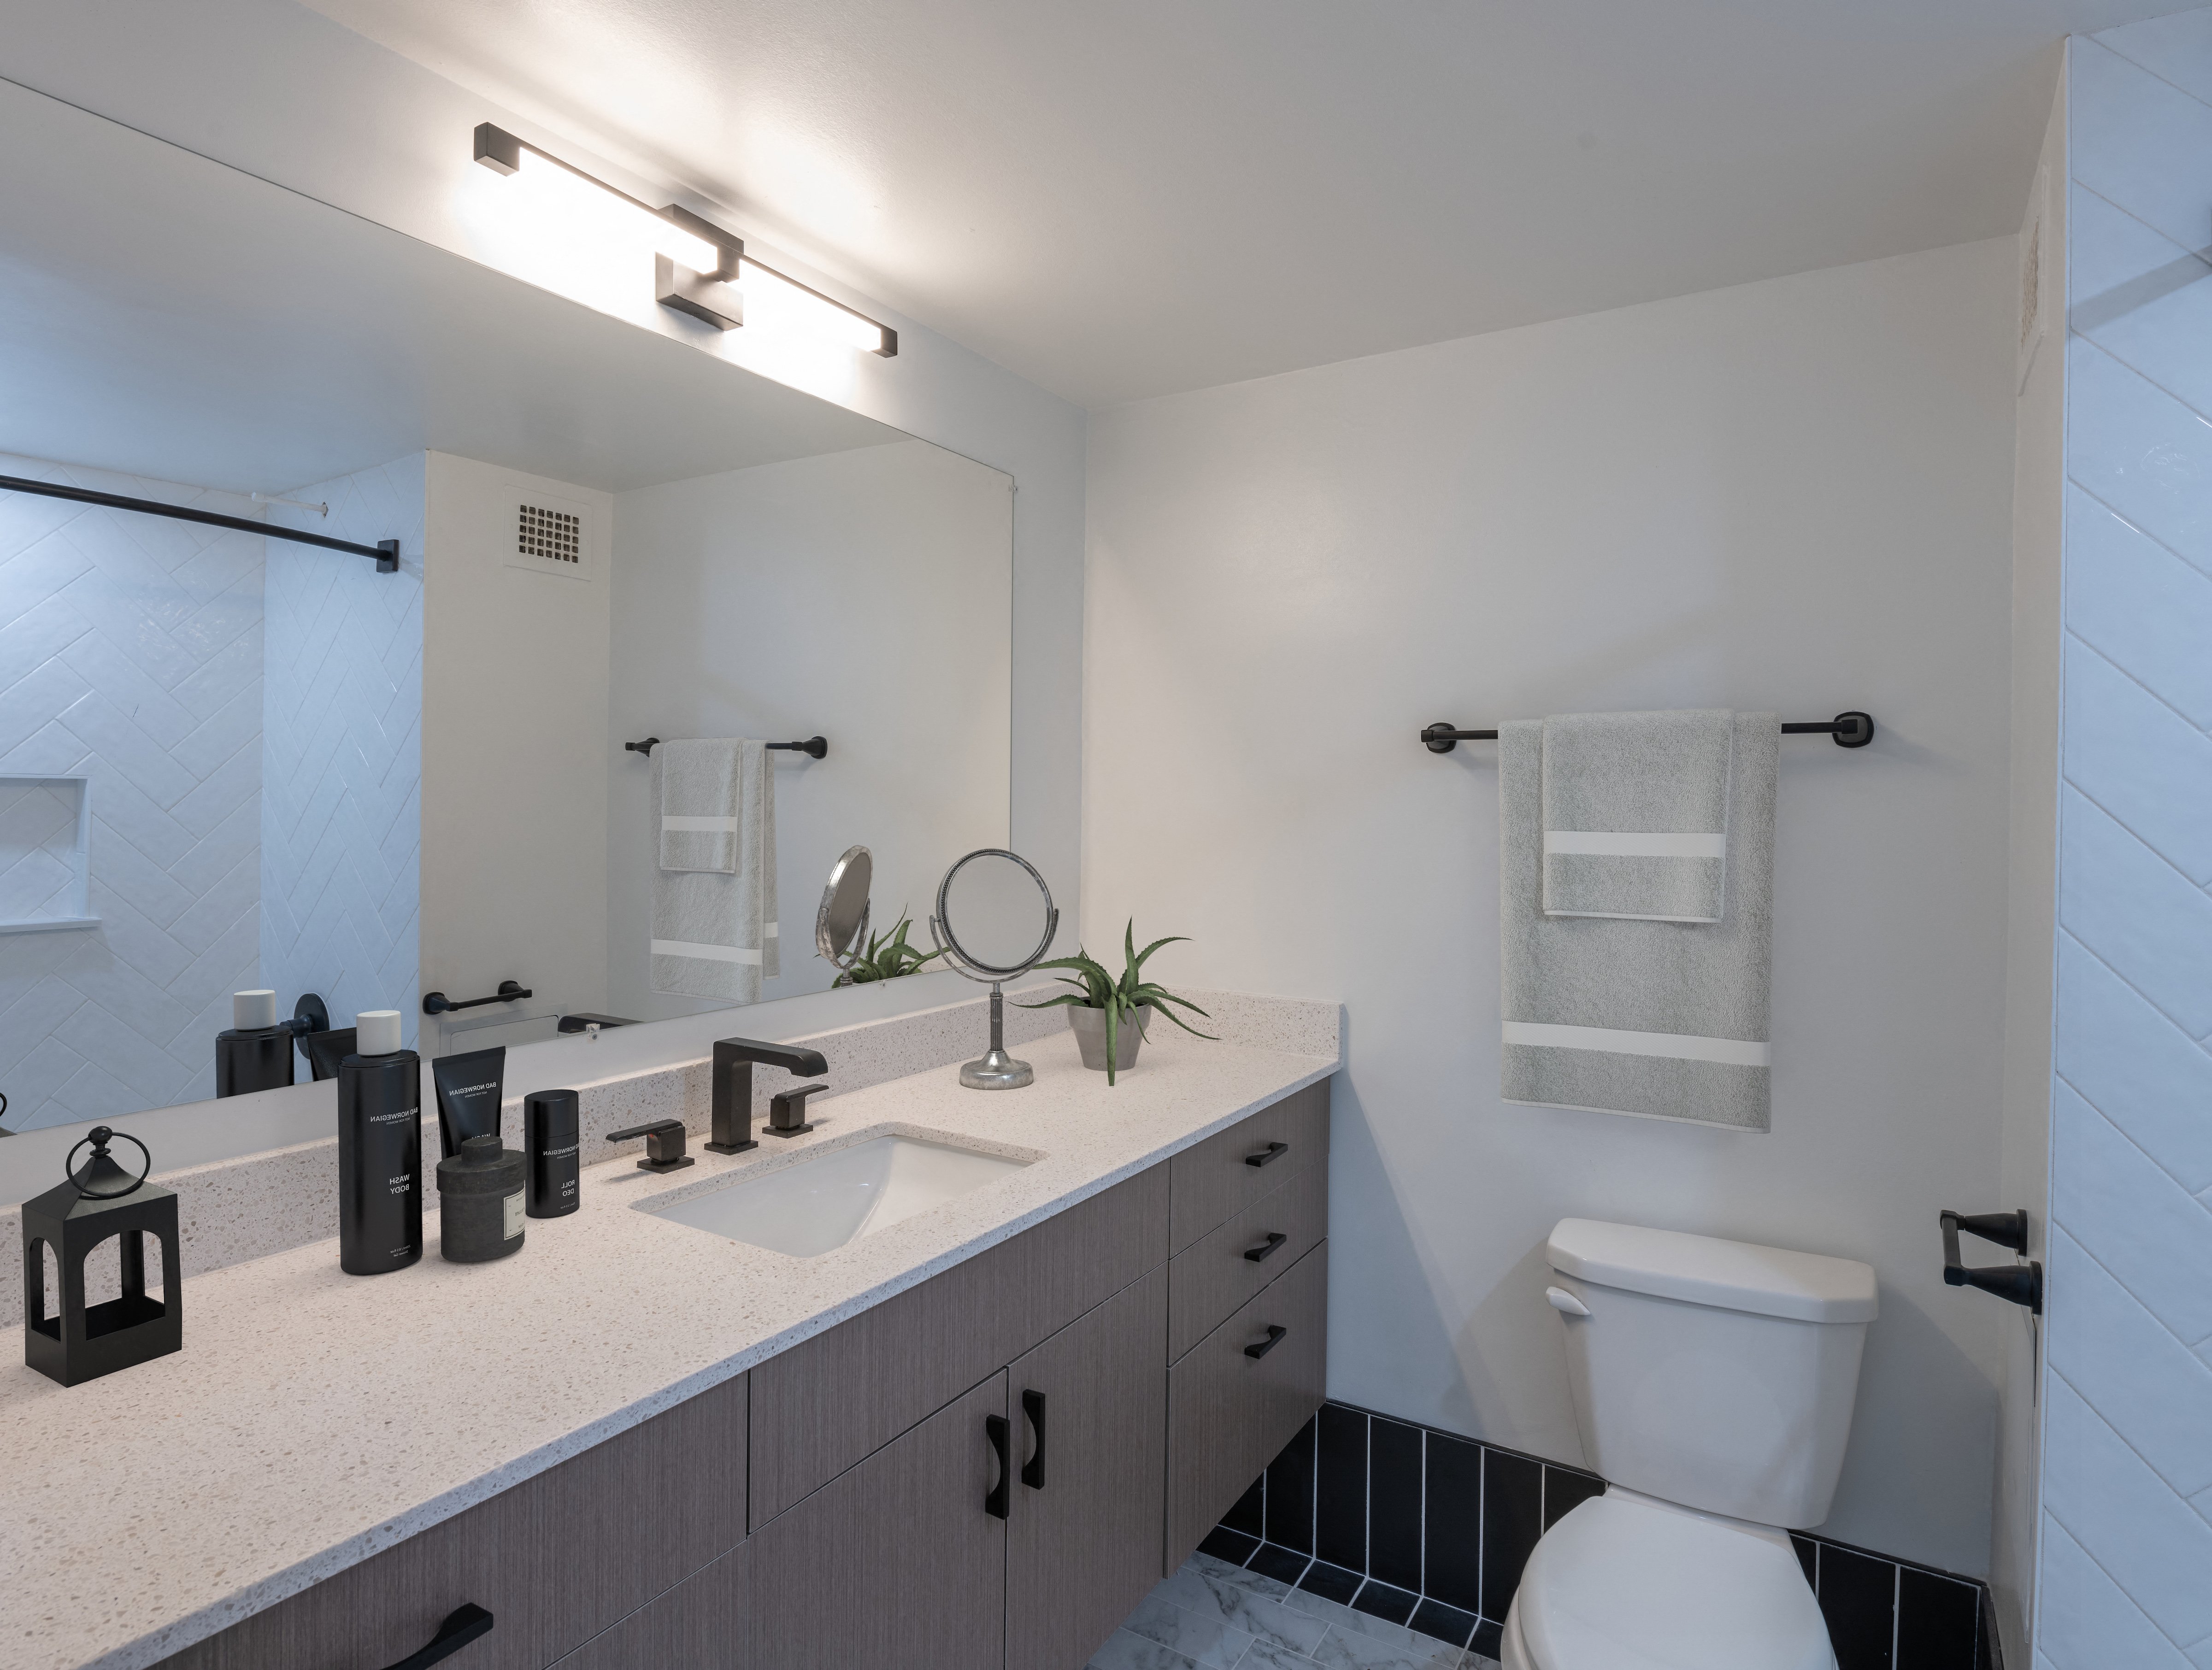 Premium Black Finish - tile-crafted bathrooms providing spa-like retreat